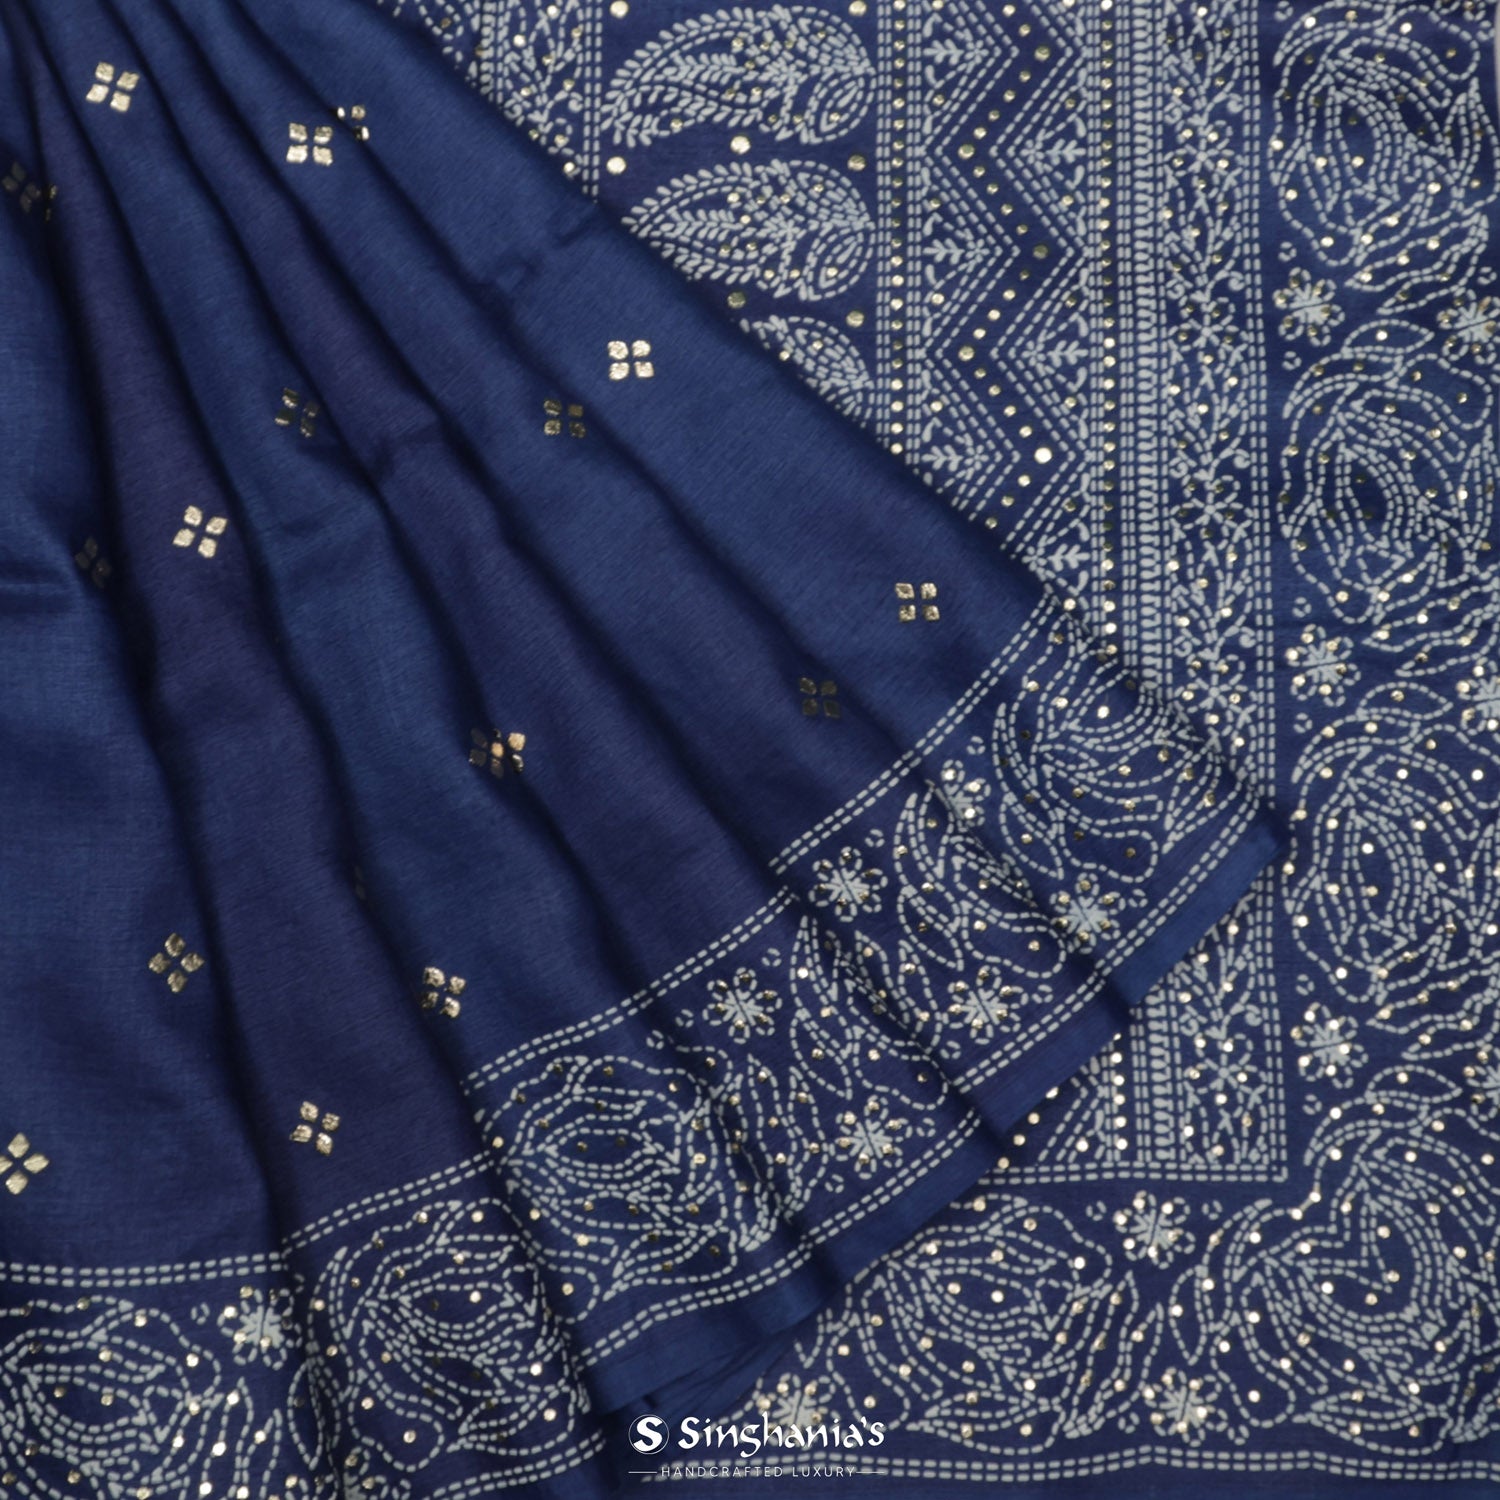 Admiral Blue Printed Tussar Silk Saree With Kantha Inspired Pattern